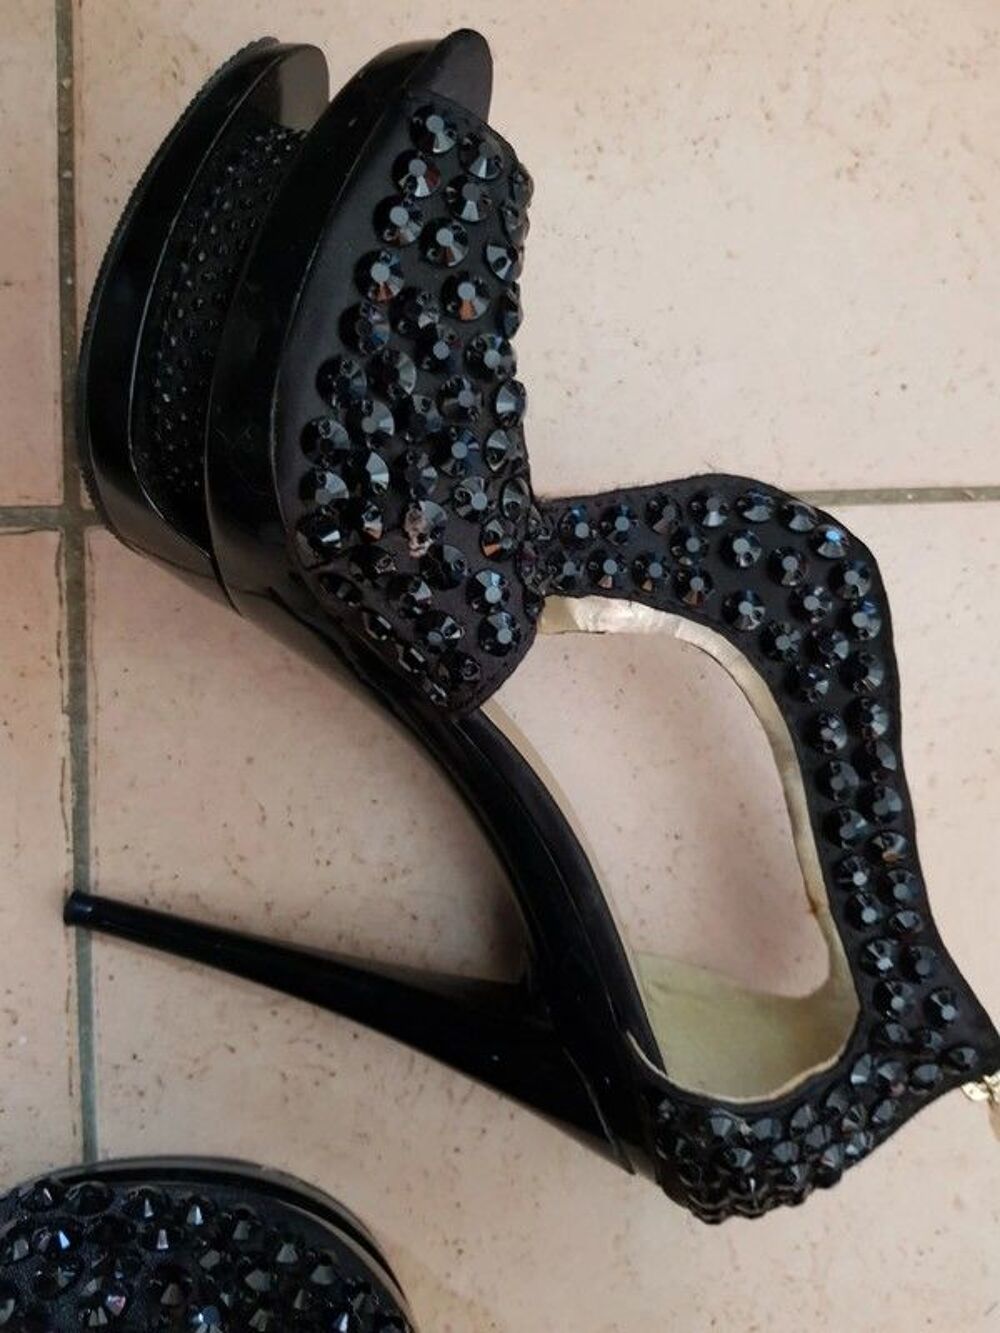 Escarpin noir a strass talon 14 cm marque lydc london neuve Chaussures